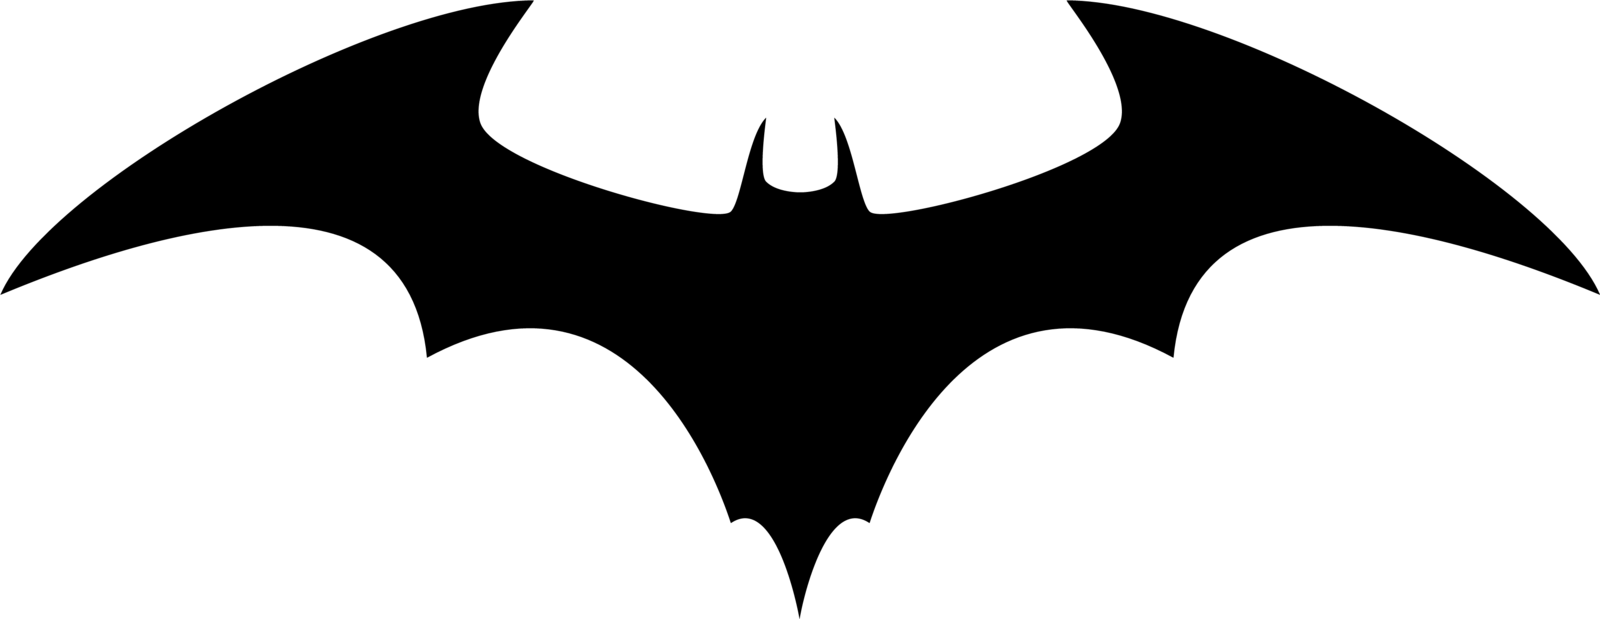 Cool Bat Logo - Cool Batman Symbol Drawings.com. T Shirt Ideas